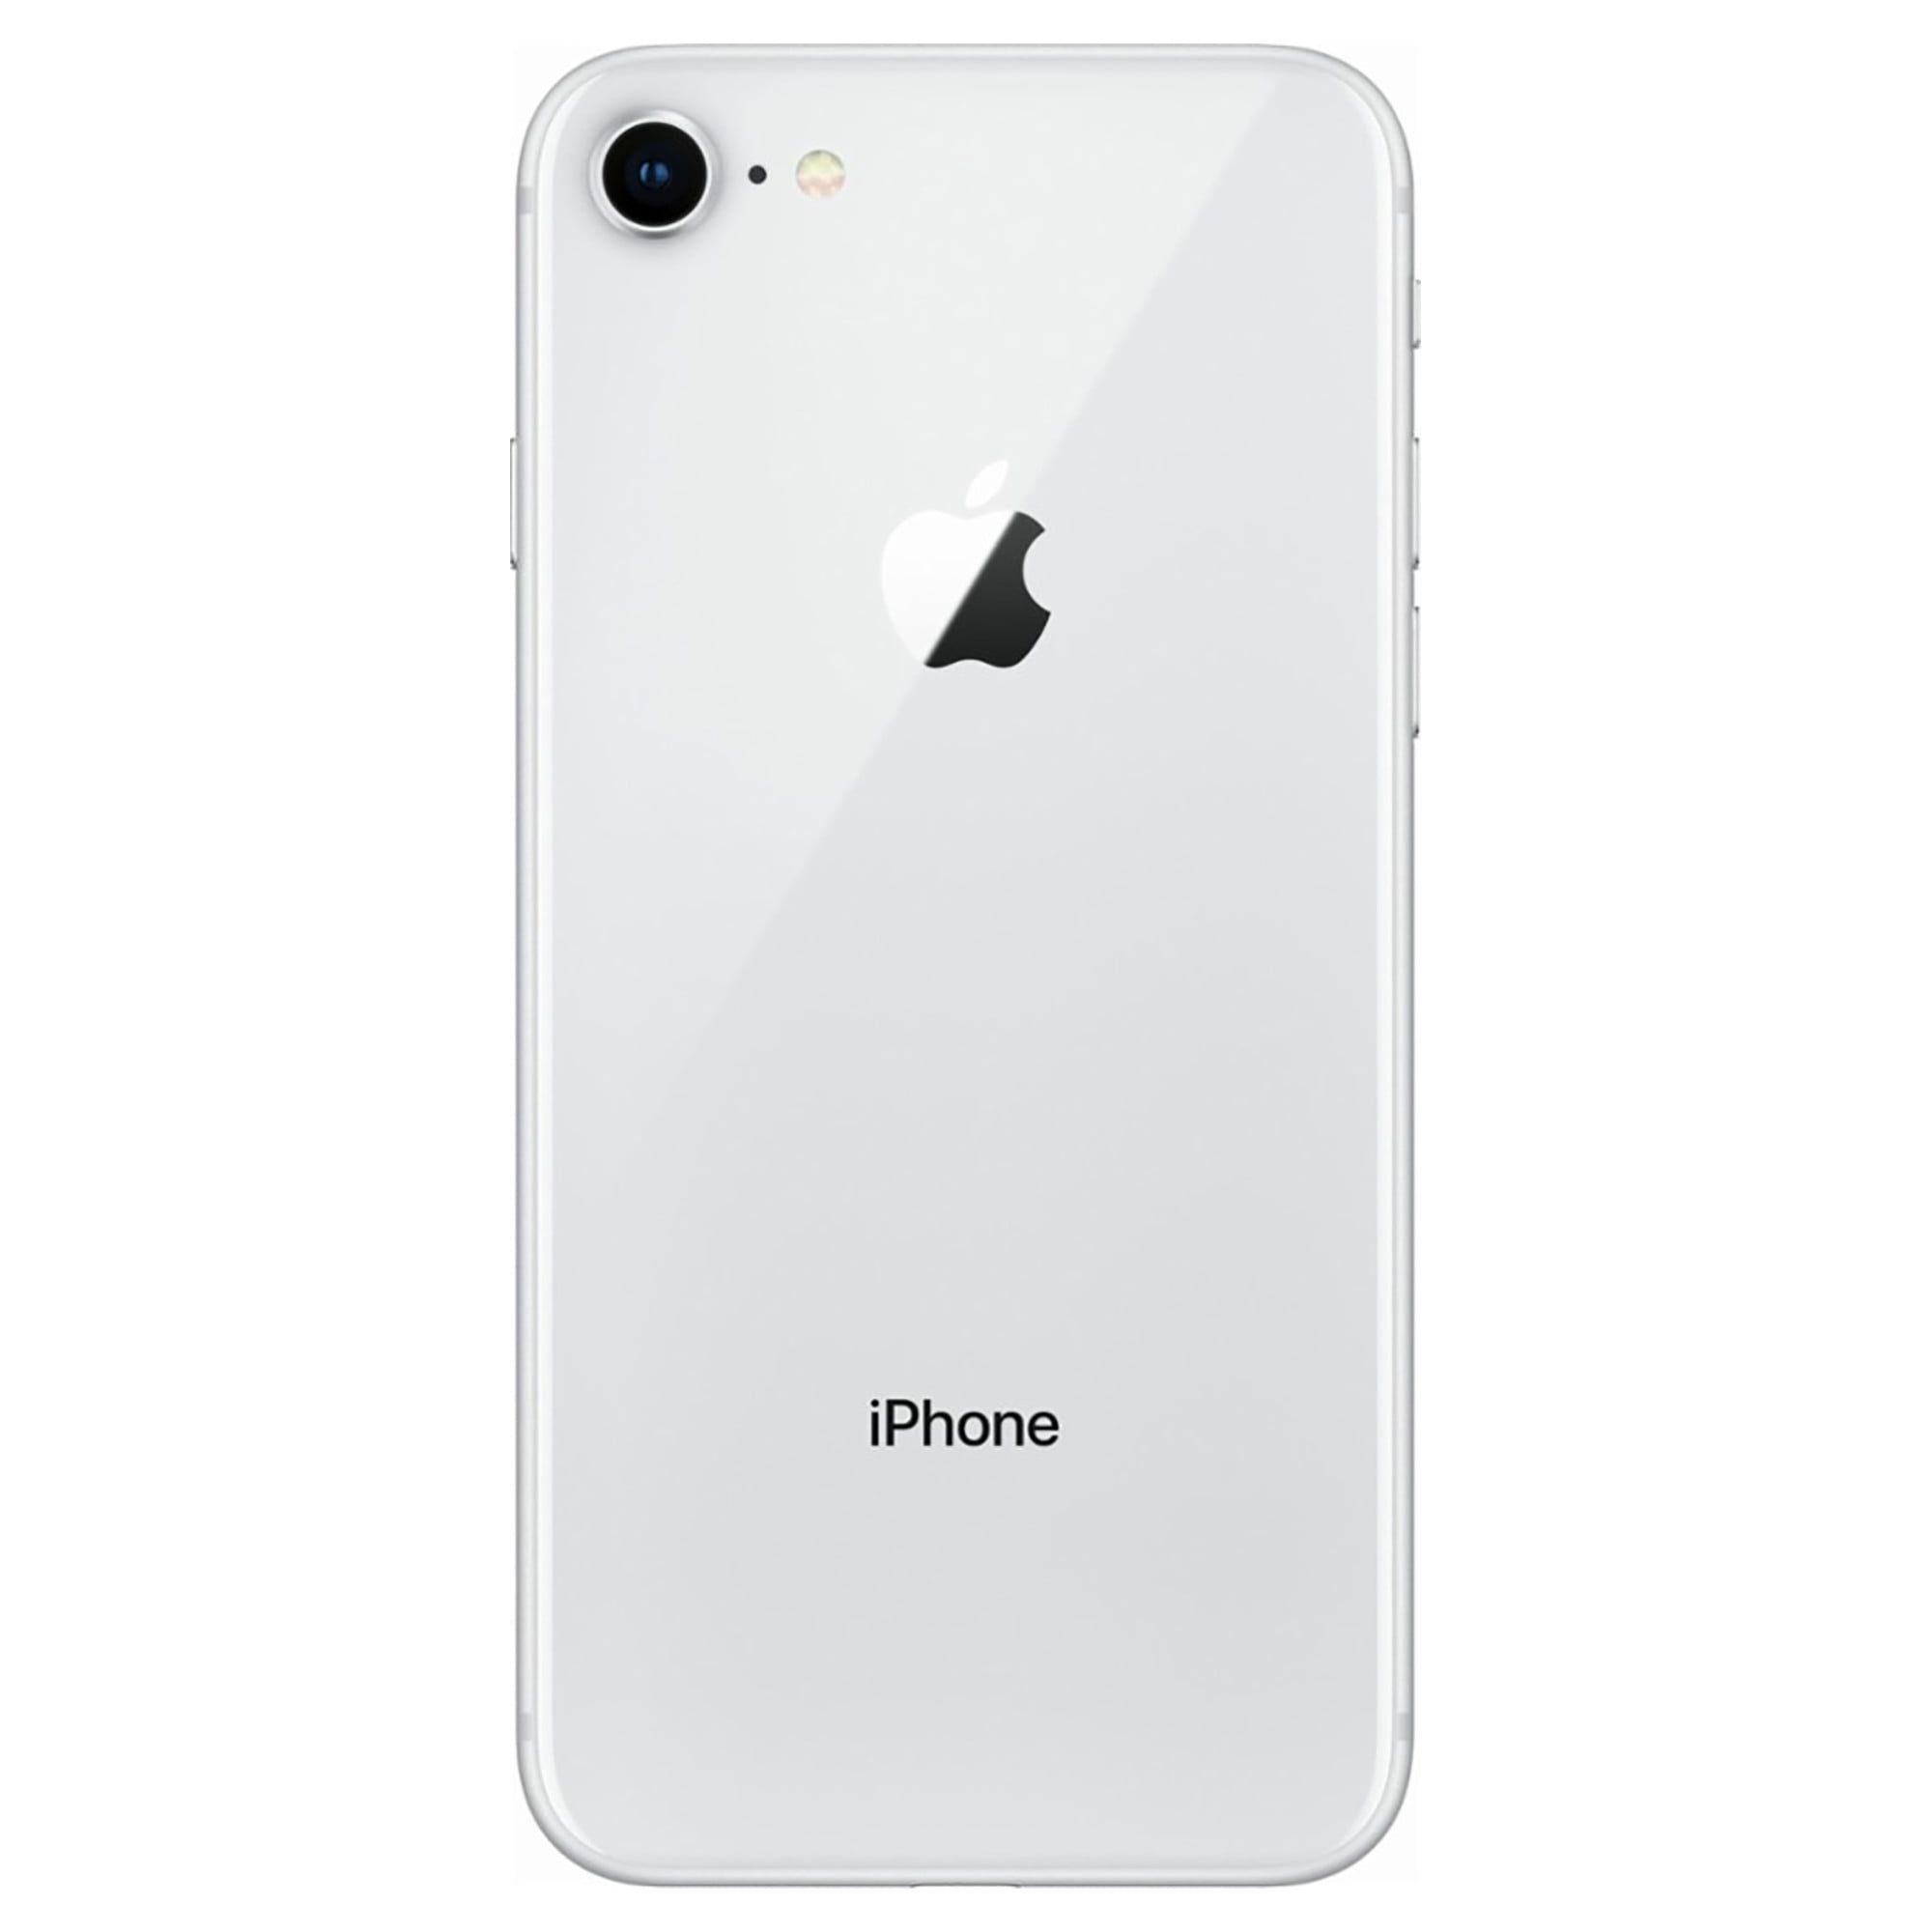 Apple iPhone 8 128GB Unlocked GSM/CDMA Phone w/ 12MP Camera - Silver